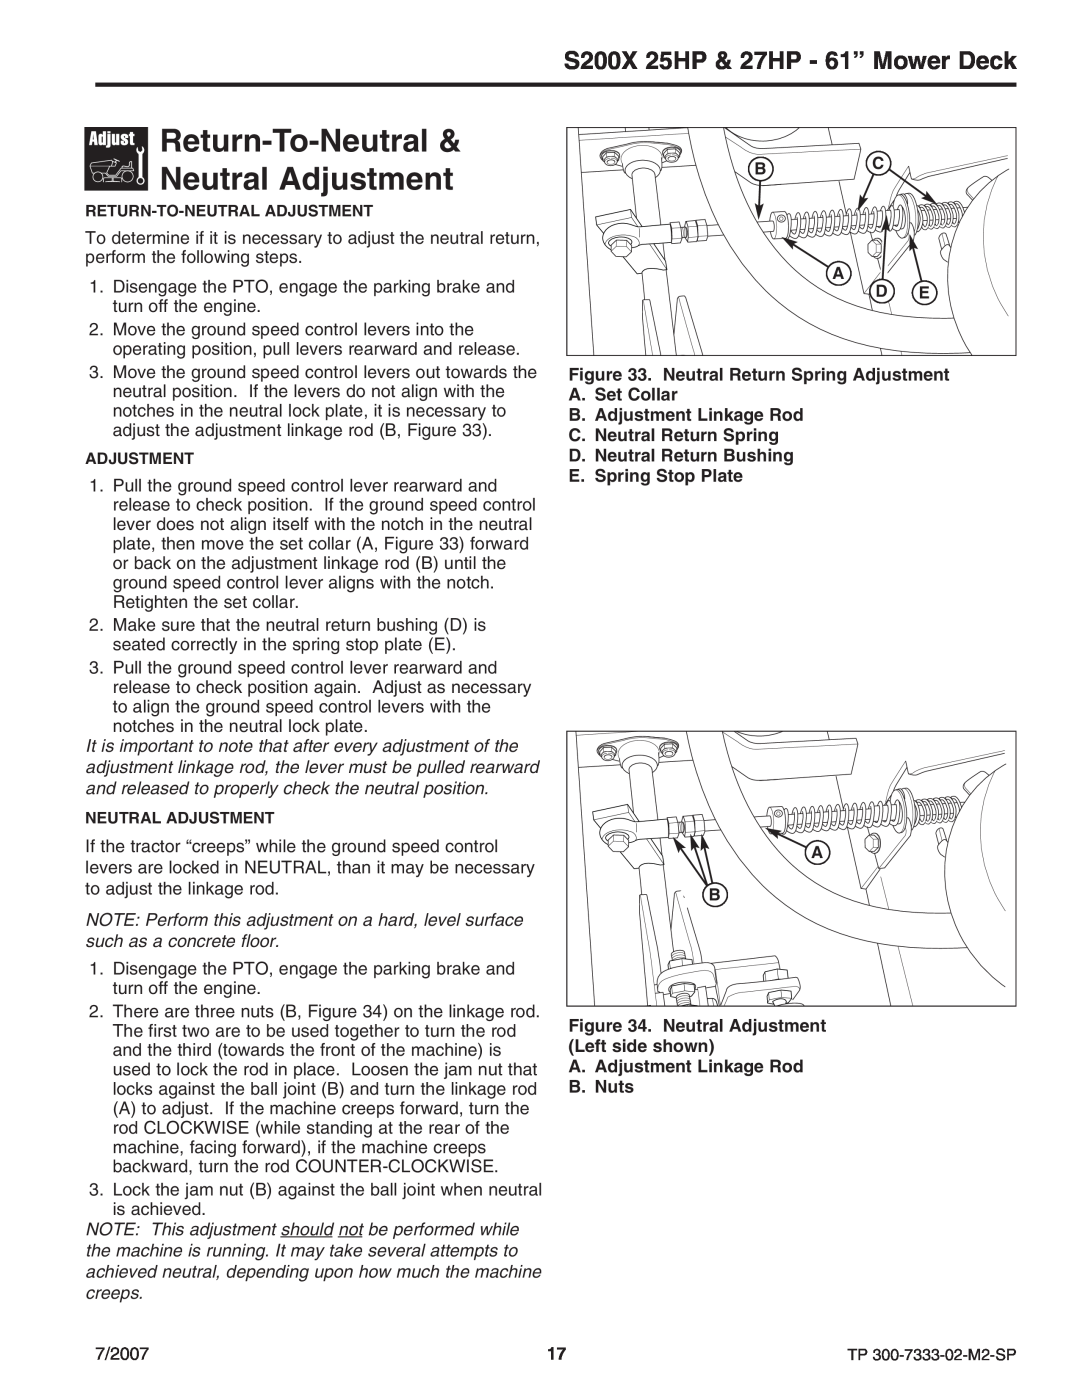 Briggs & Stratton 5900664, 5900692 manual Return-To-Neutral, Neutral Adjustment, S200X 25HP & 27HP - 61” Mower Deck 